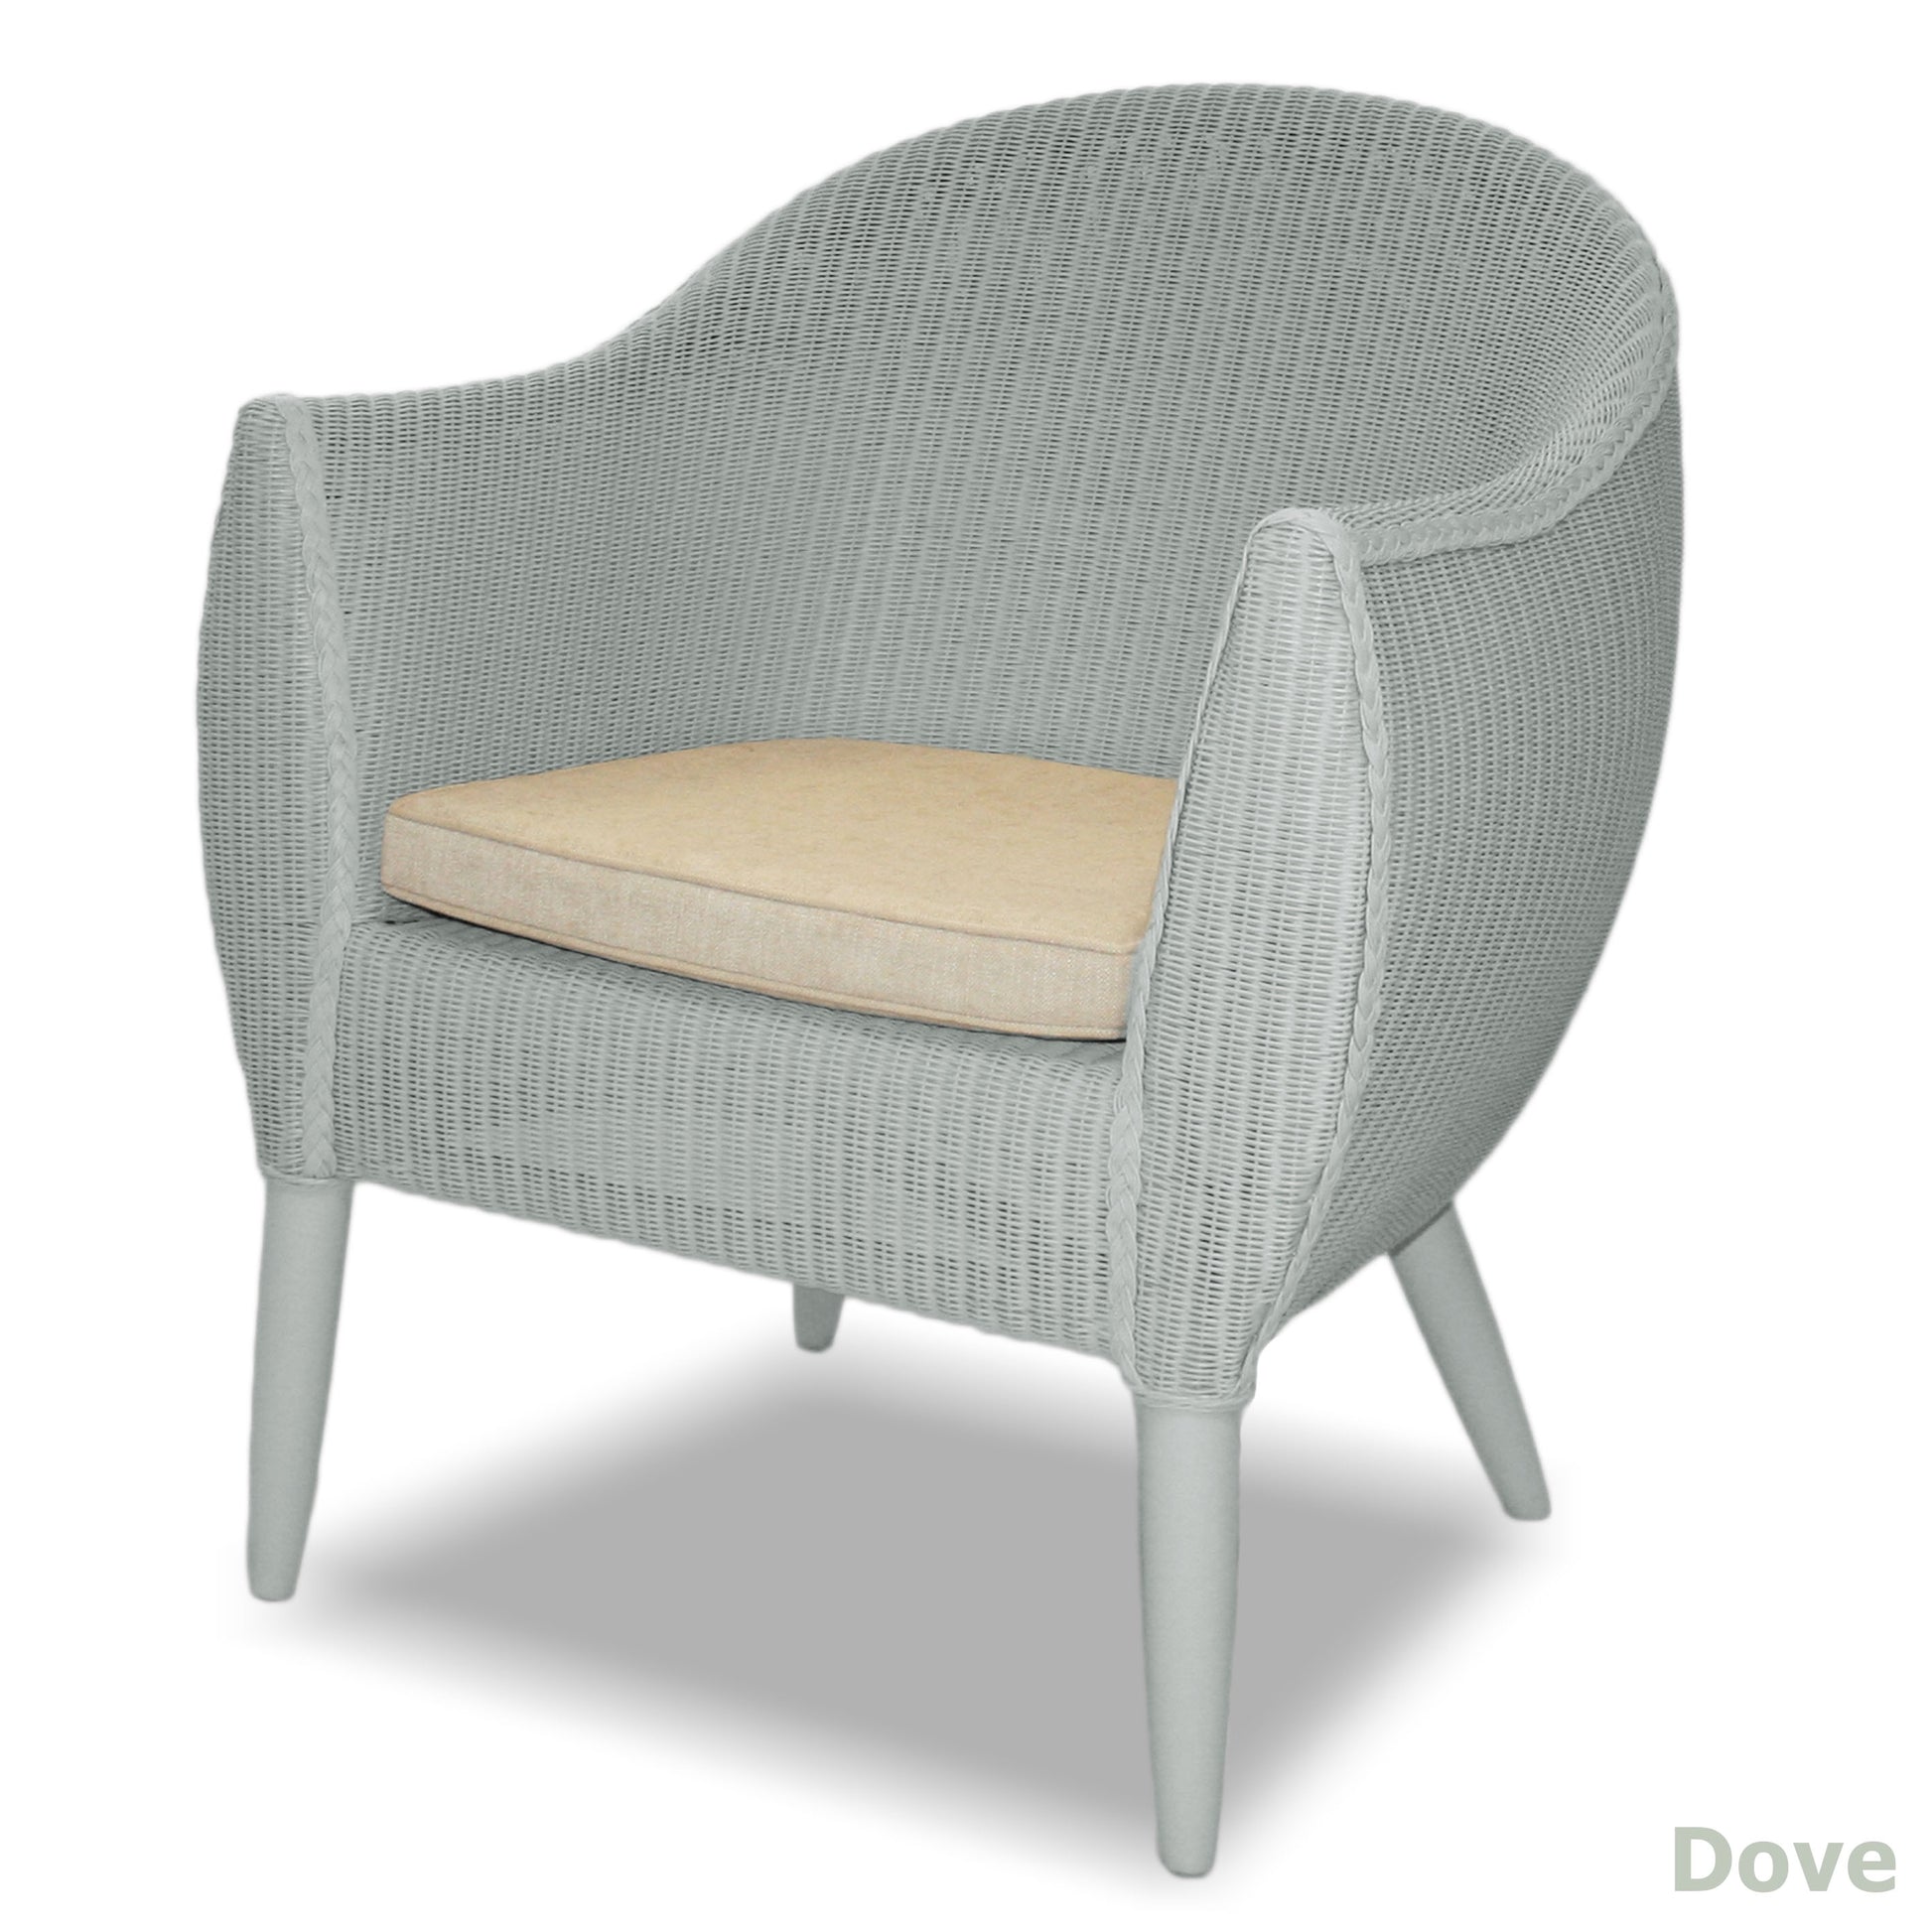 Lloyd loom Egton Chair Dove